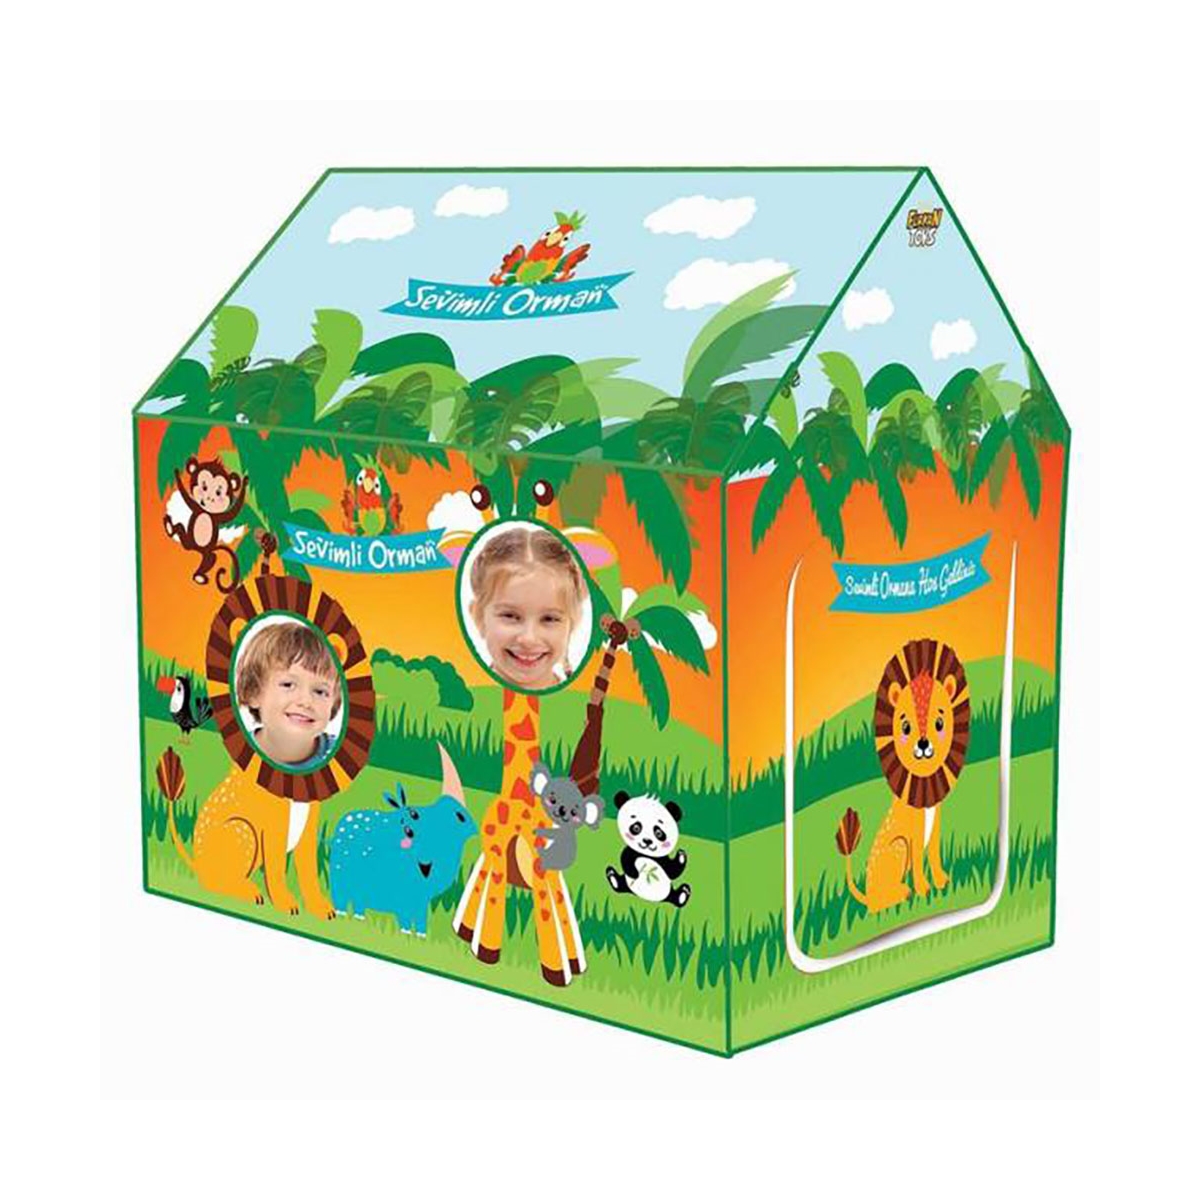 Furkan Toys Sevimli Orman Oyun Evi 3+ Yaş Yeşil